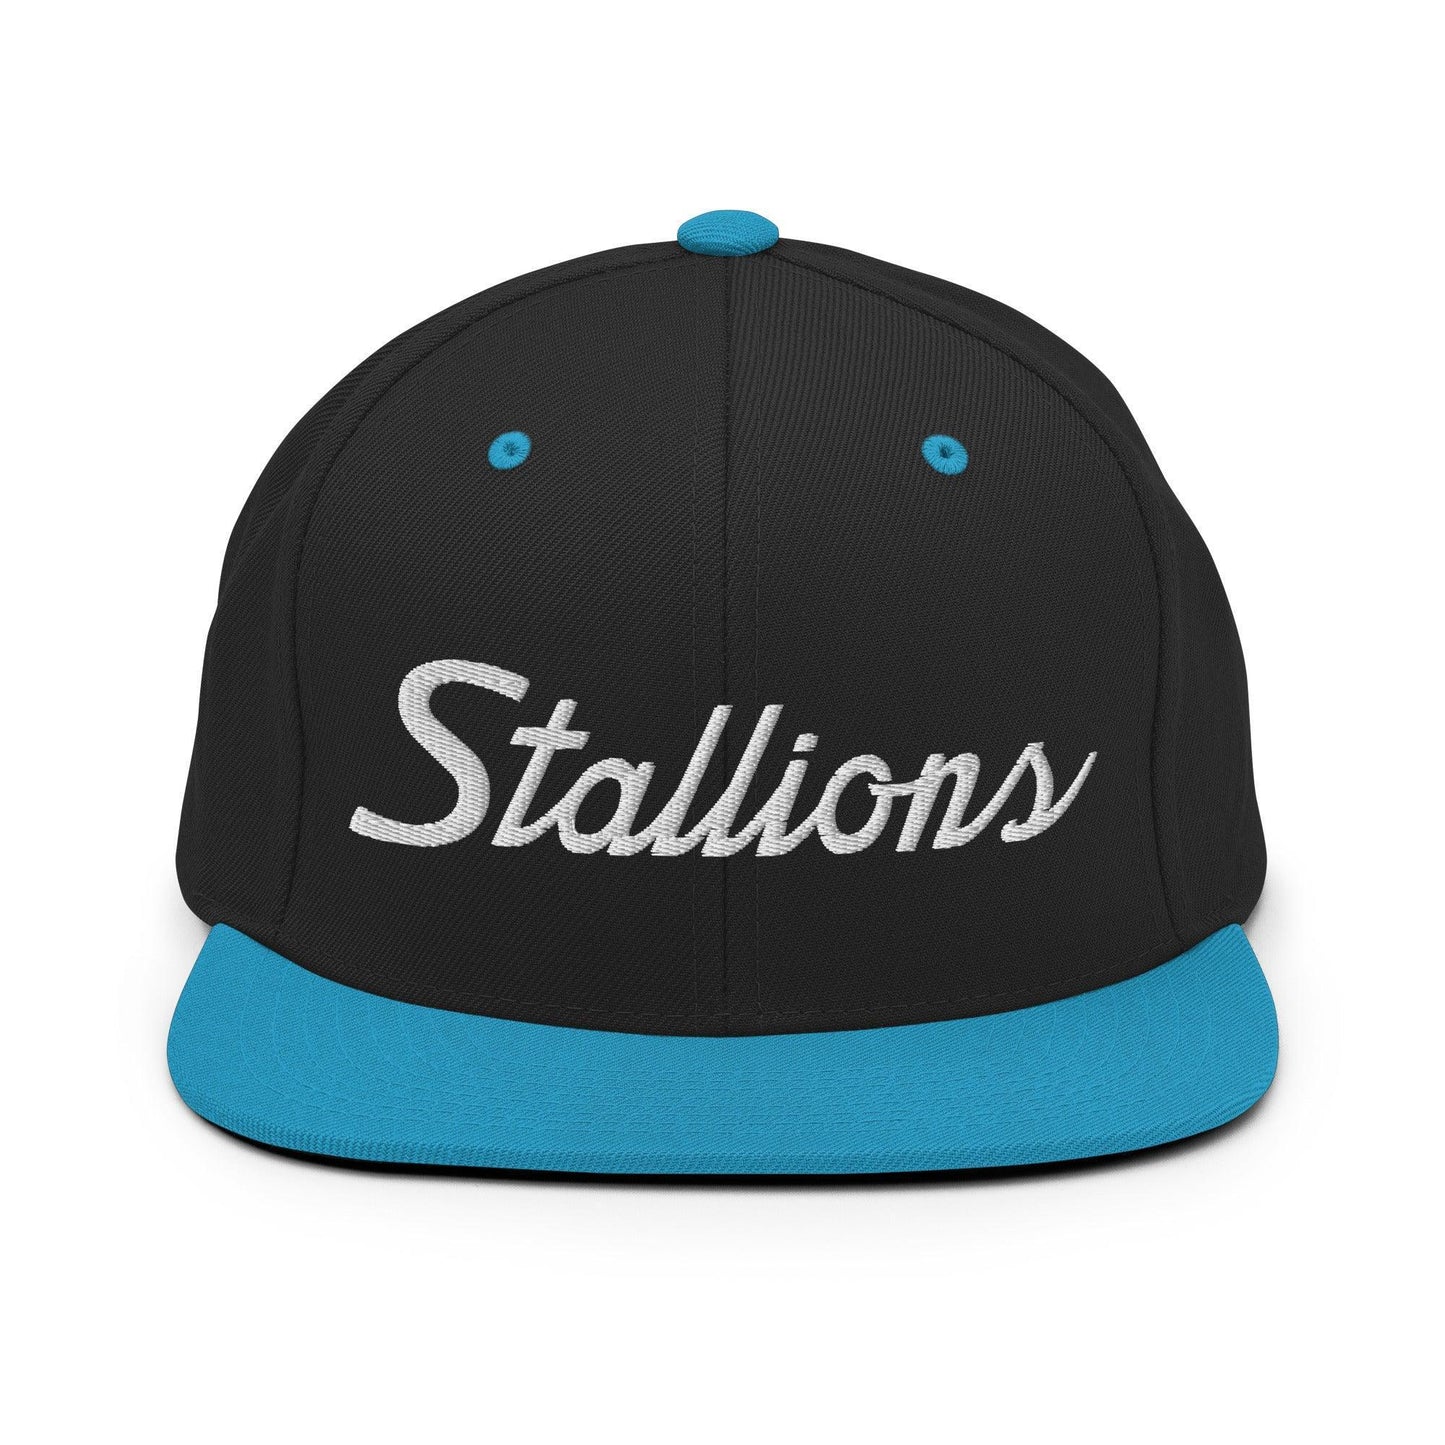 Stallions School Mascot Script Snapback Hat Black/ Teal